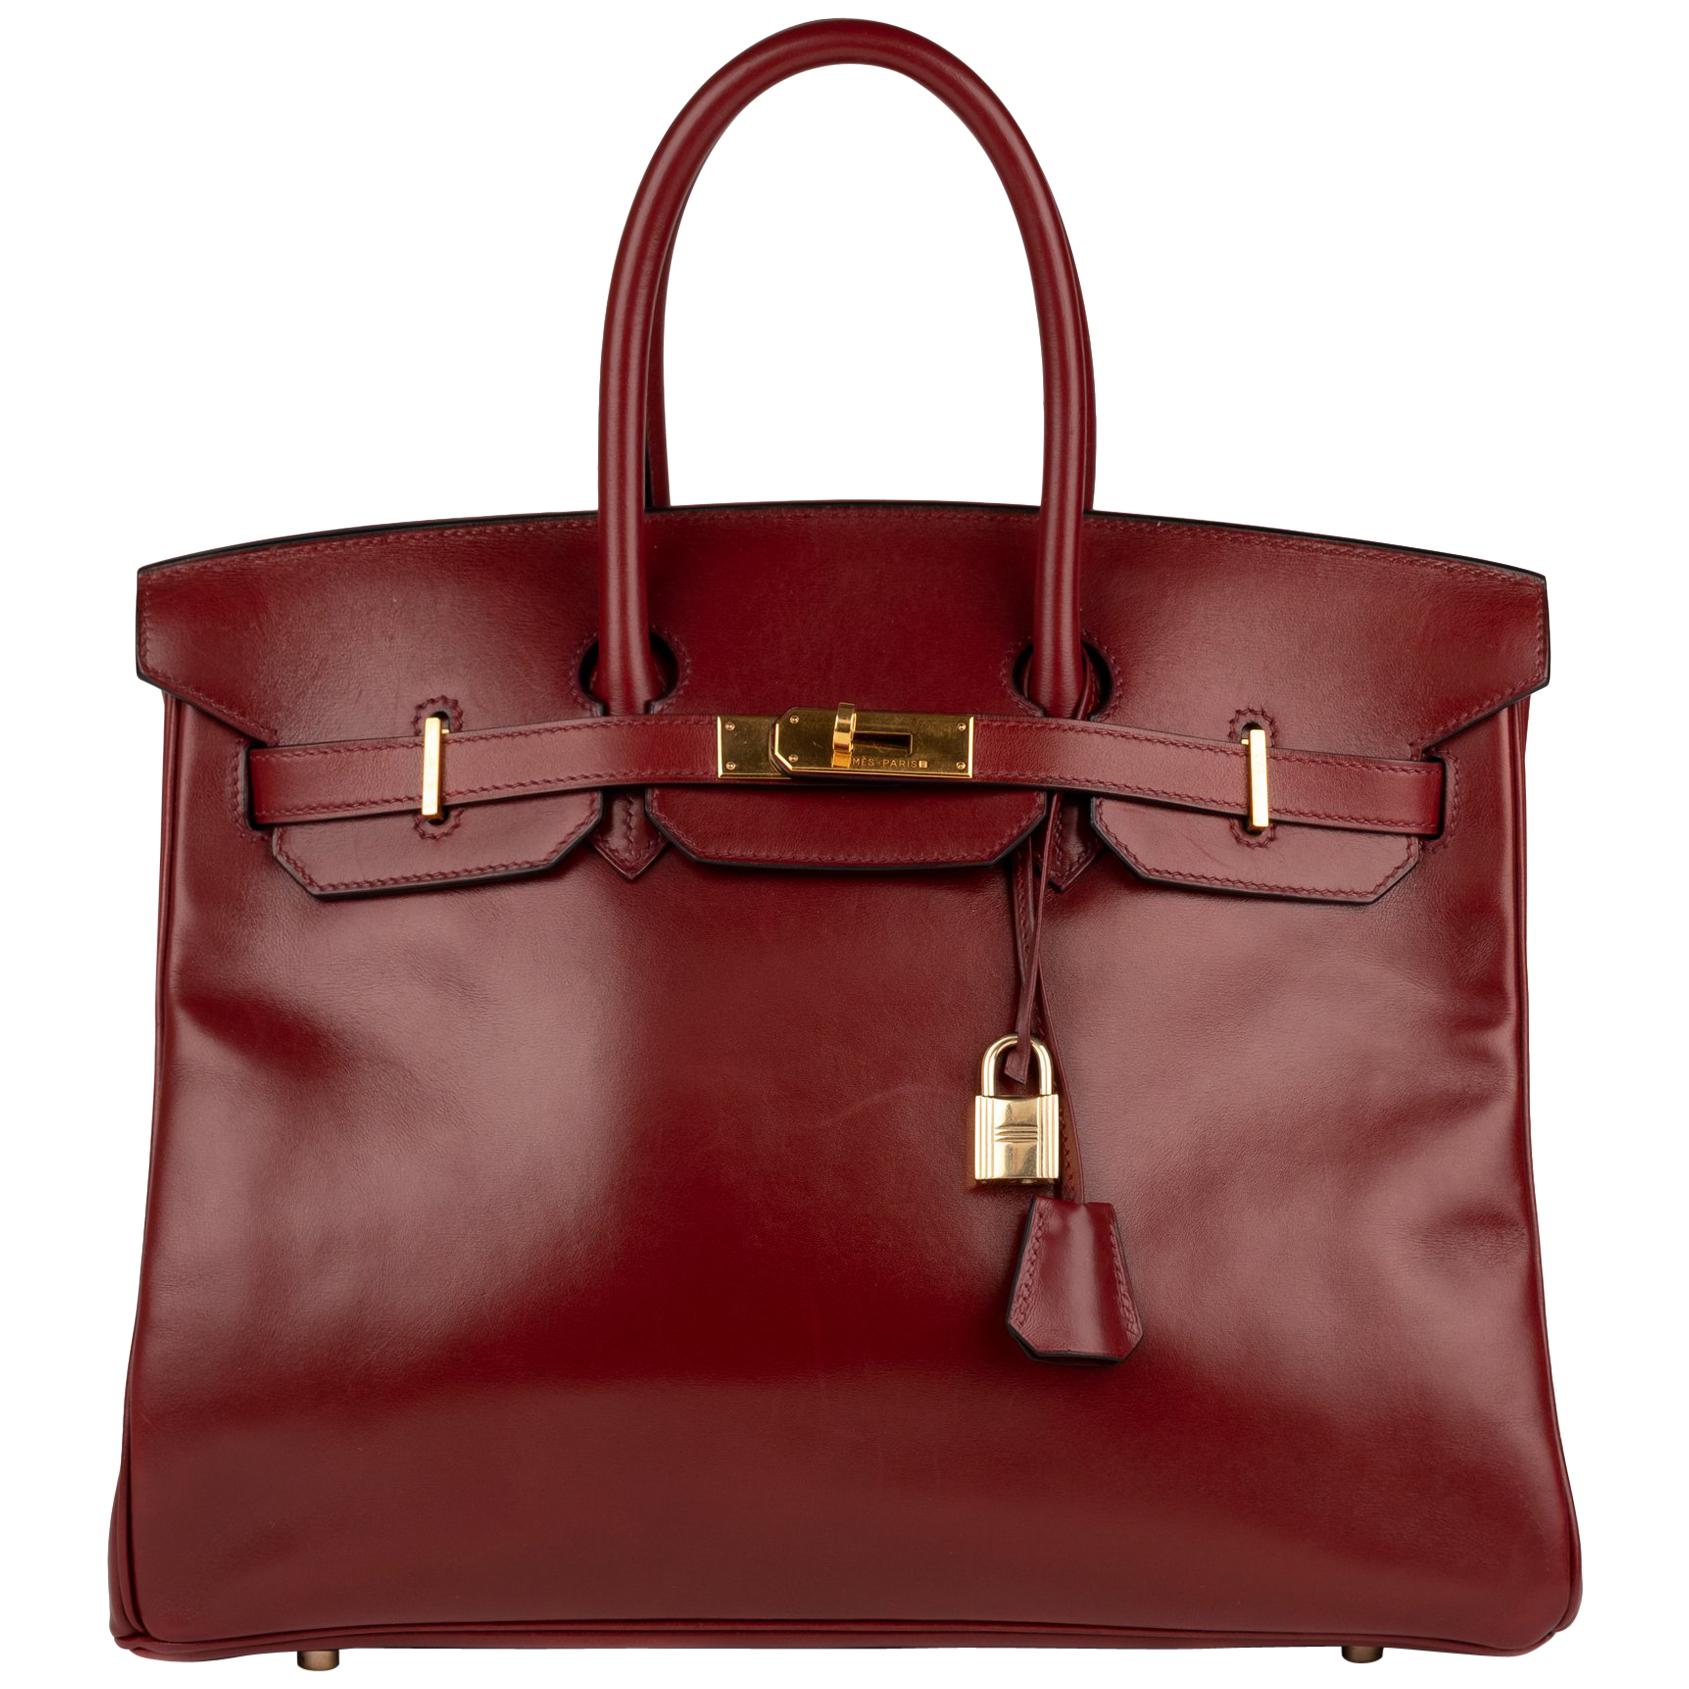 Hermes Birkin35cm Burgundy Box Leather Handbag